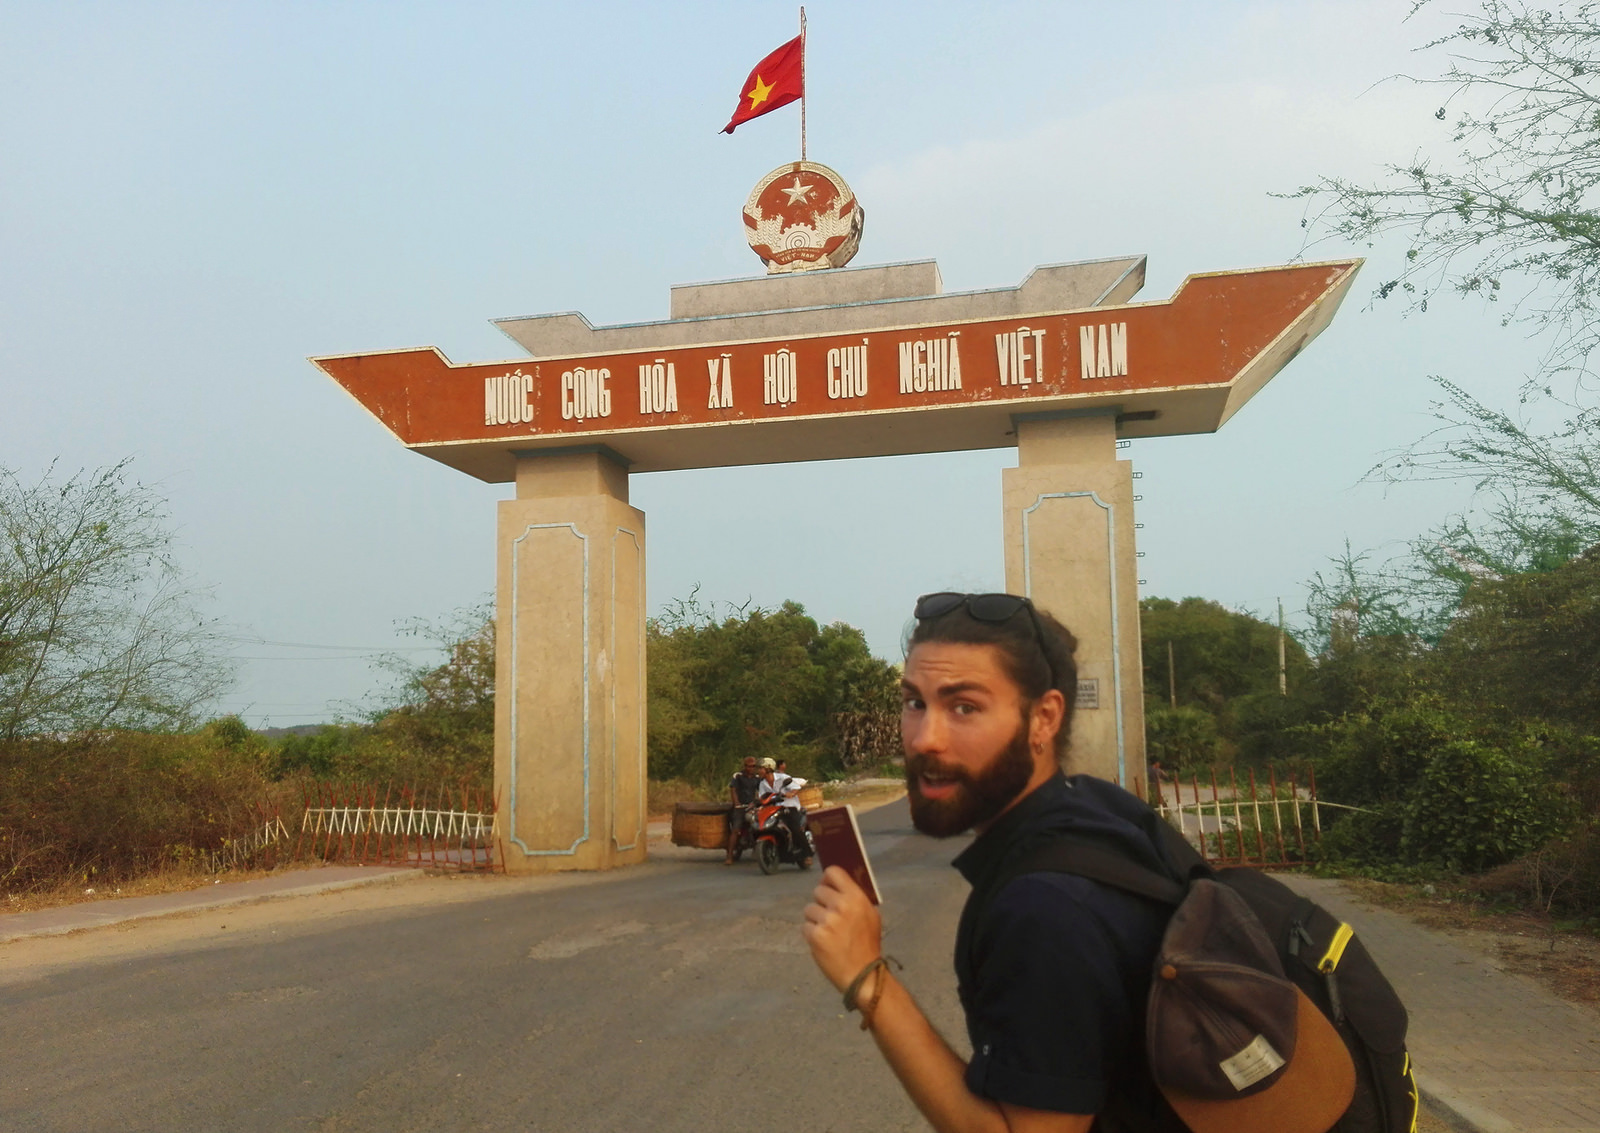 Mario crossing a vietnamese border